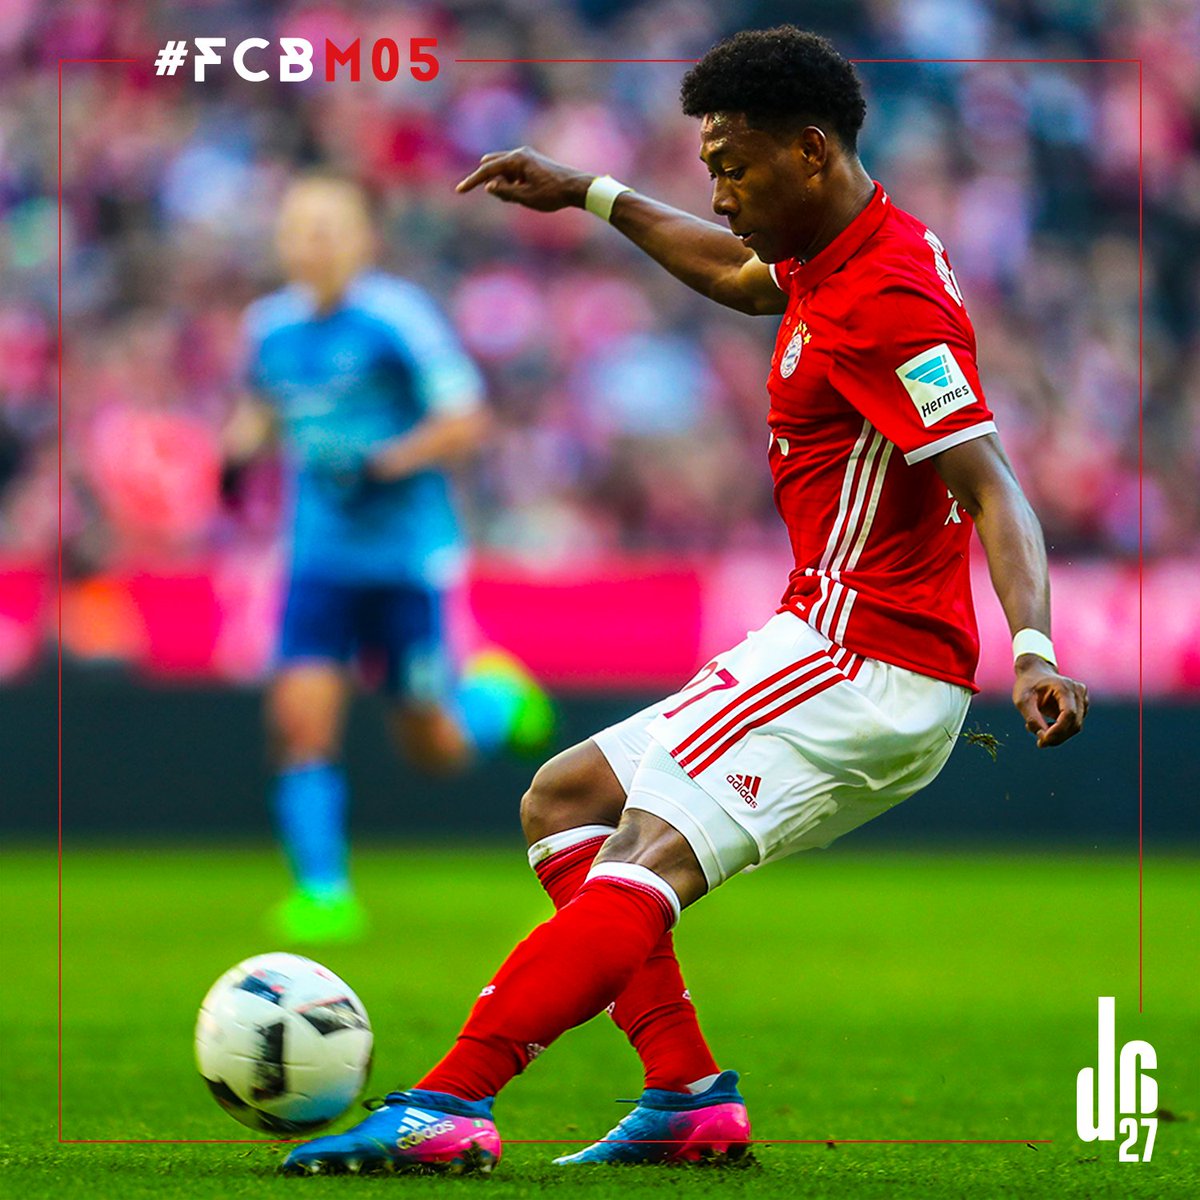 Let’s move on at Allianz Arena 🔴🔴🔴 #FCBM05 #da27 https://t.co/EEk2SCIybp